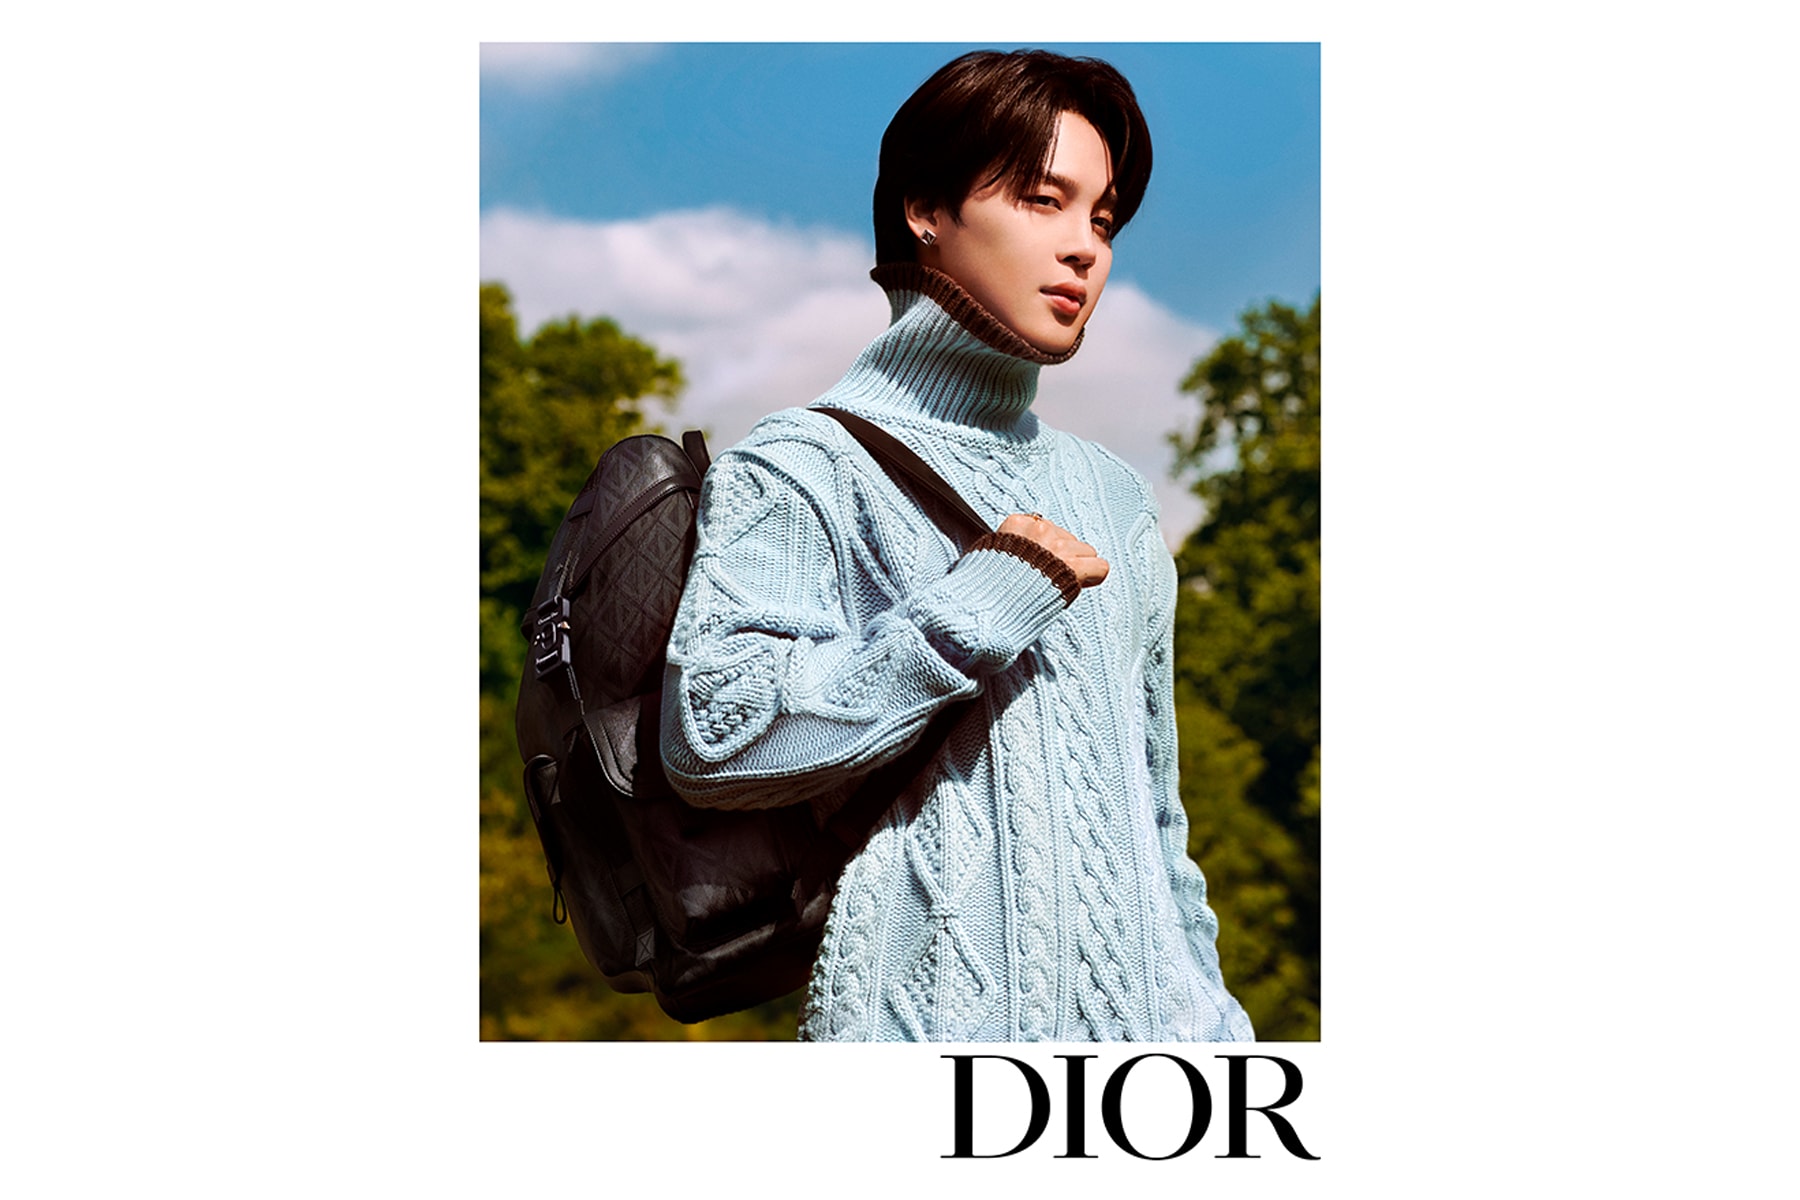 Dior 品牌大使 BTS 成員 Jimin 出鏡詮釋 2024 春季男裝系列形象